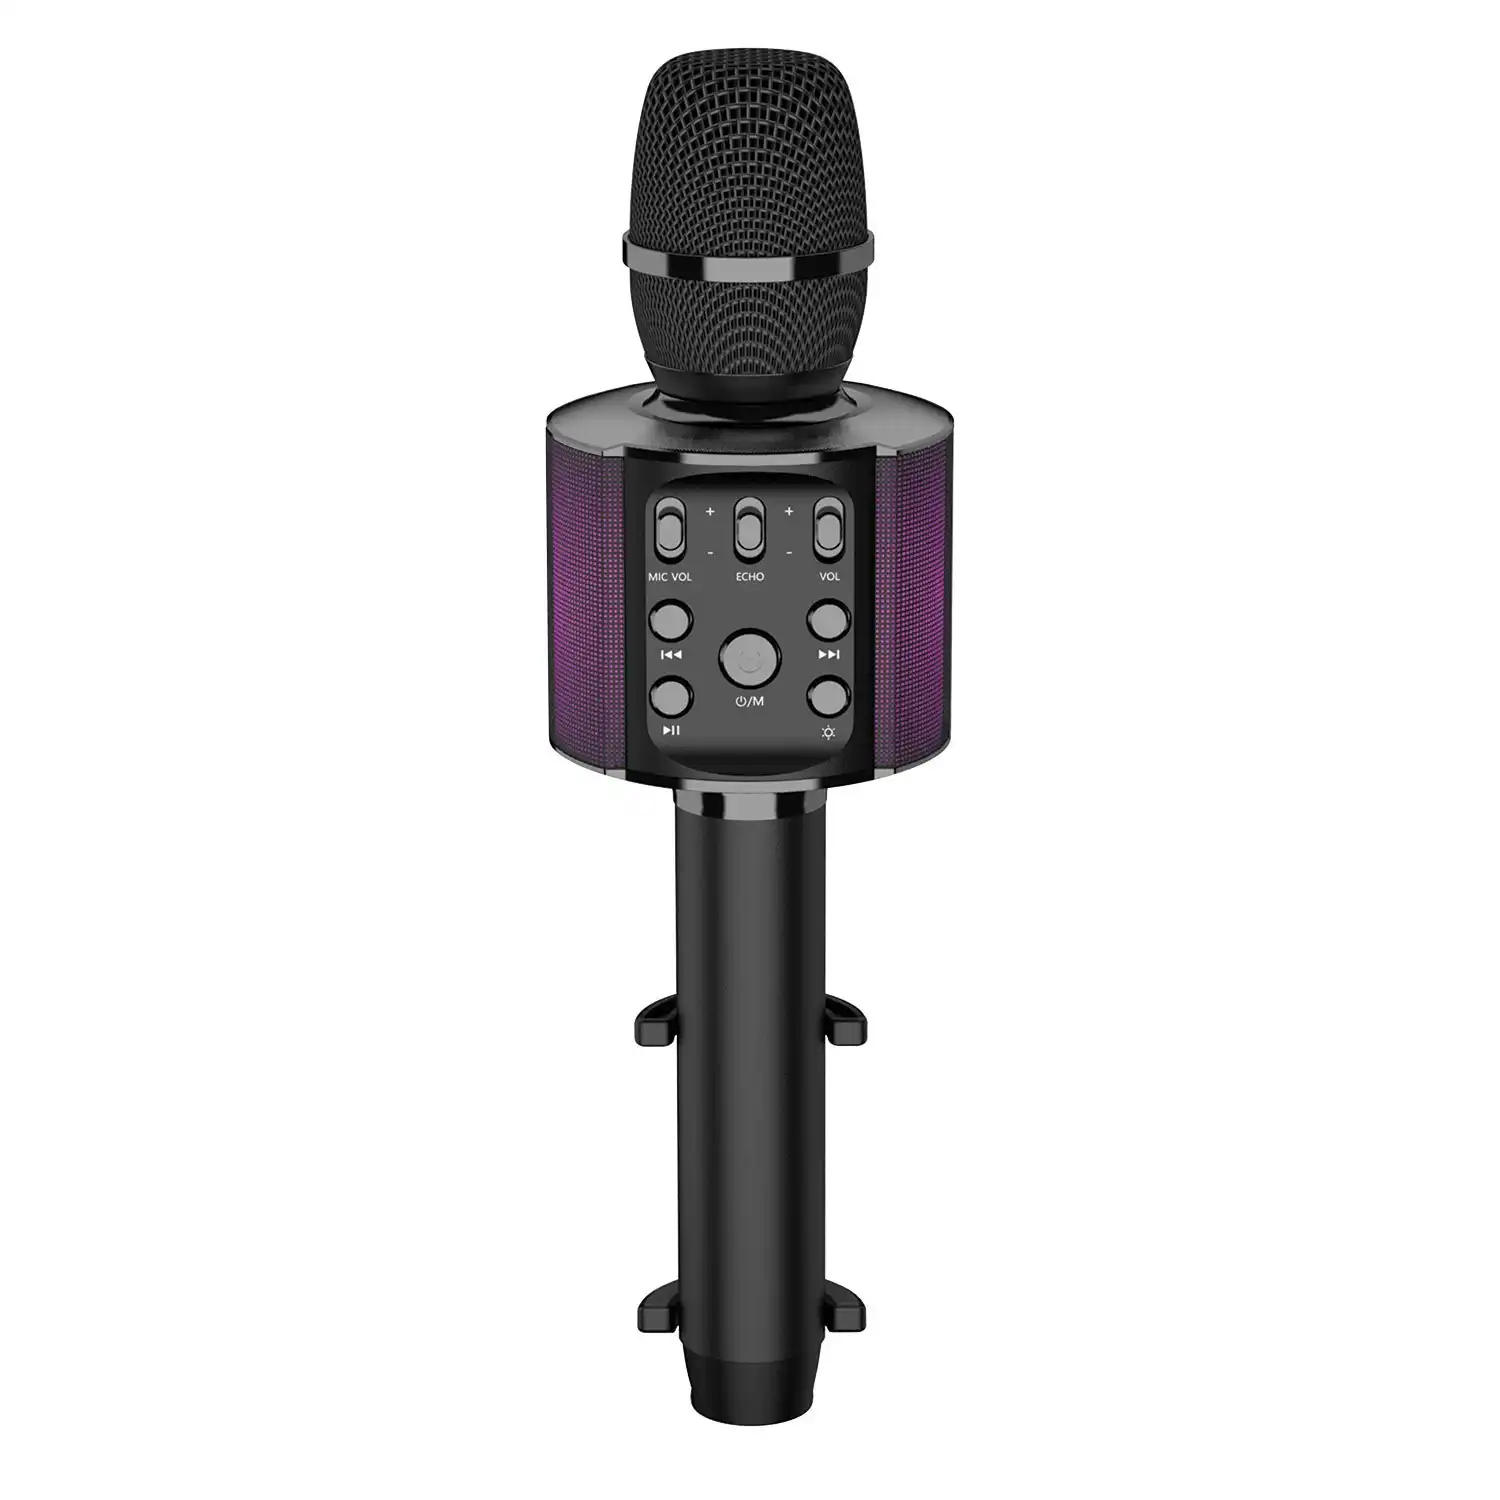 Laser Bluetooth Karaoke Microphone with Built-in Speaker and LED Lights - Black